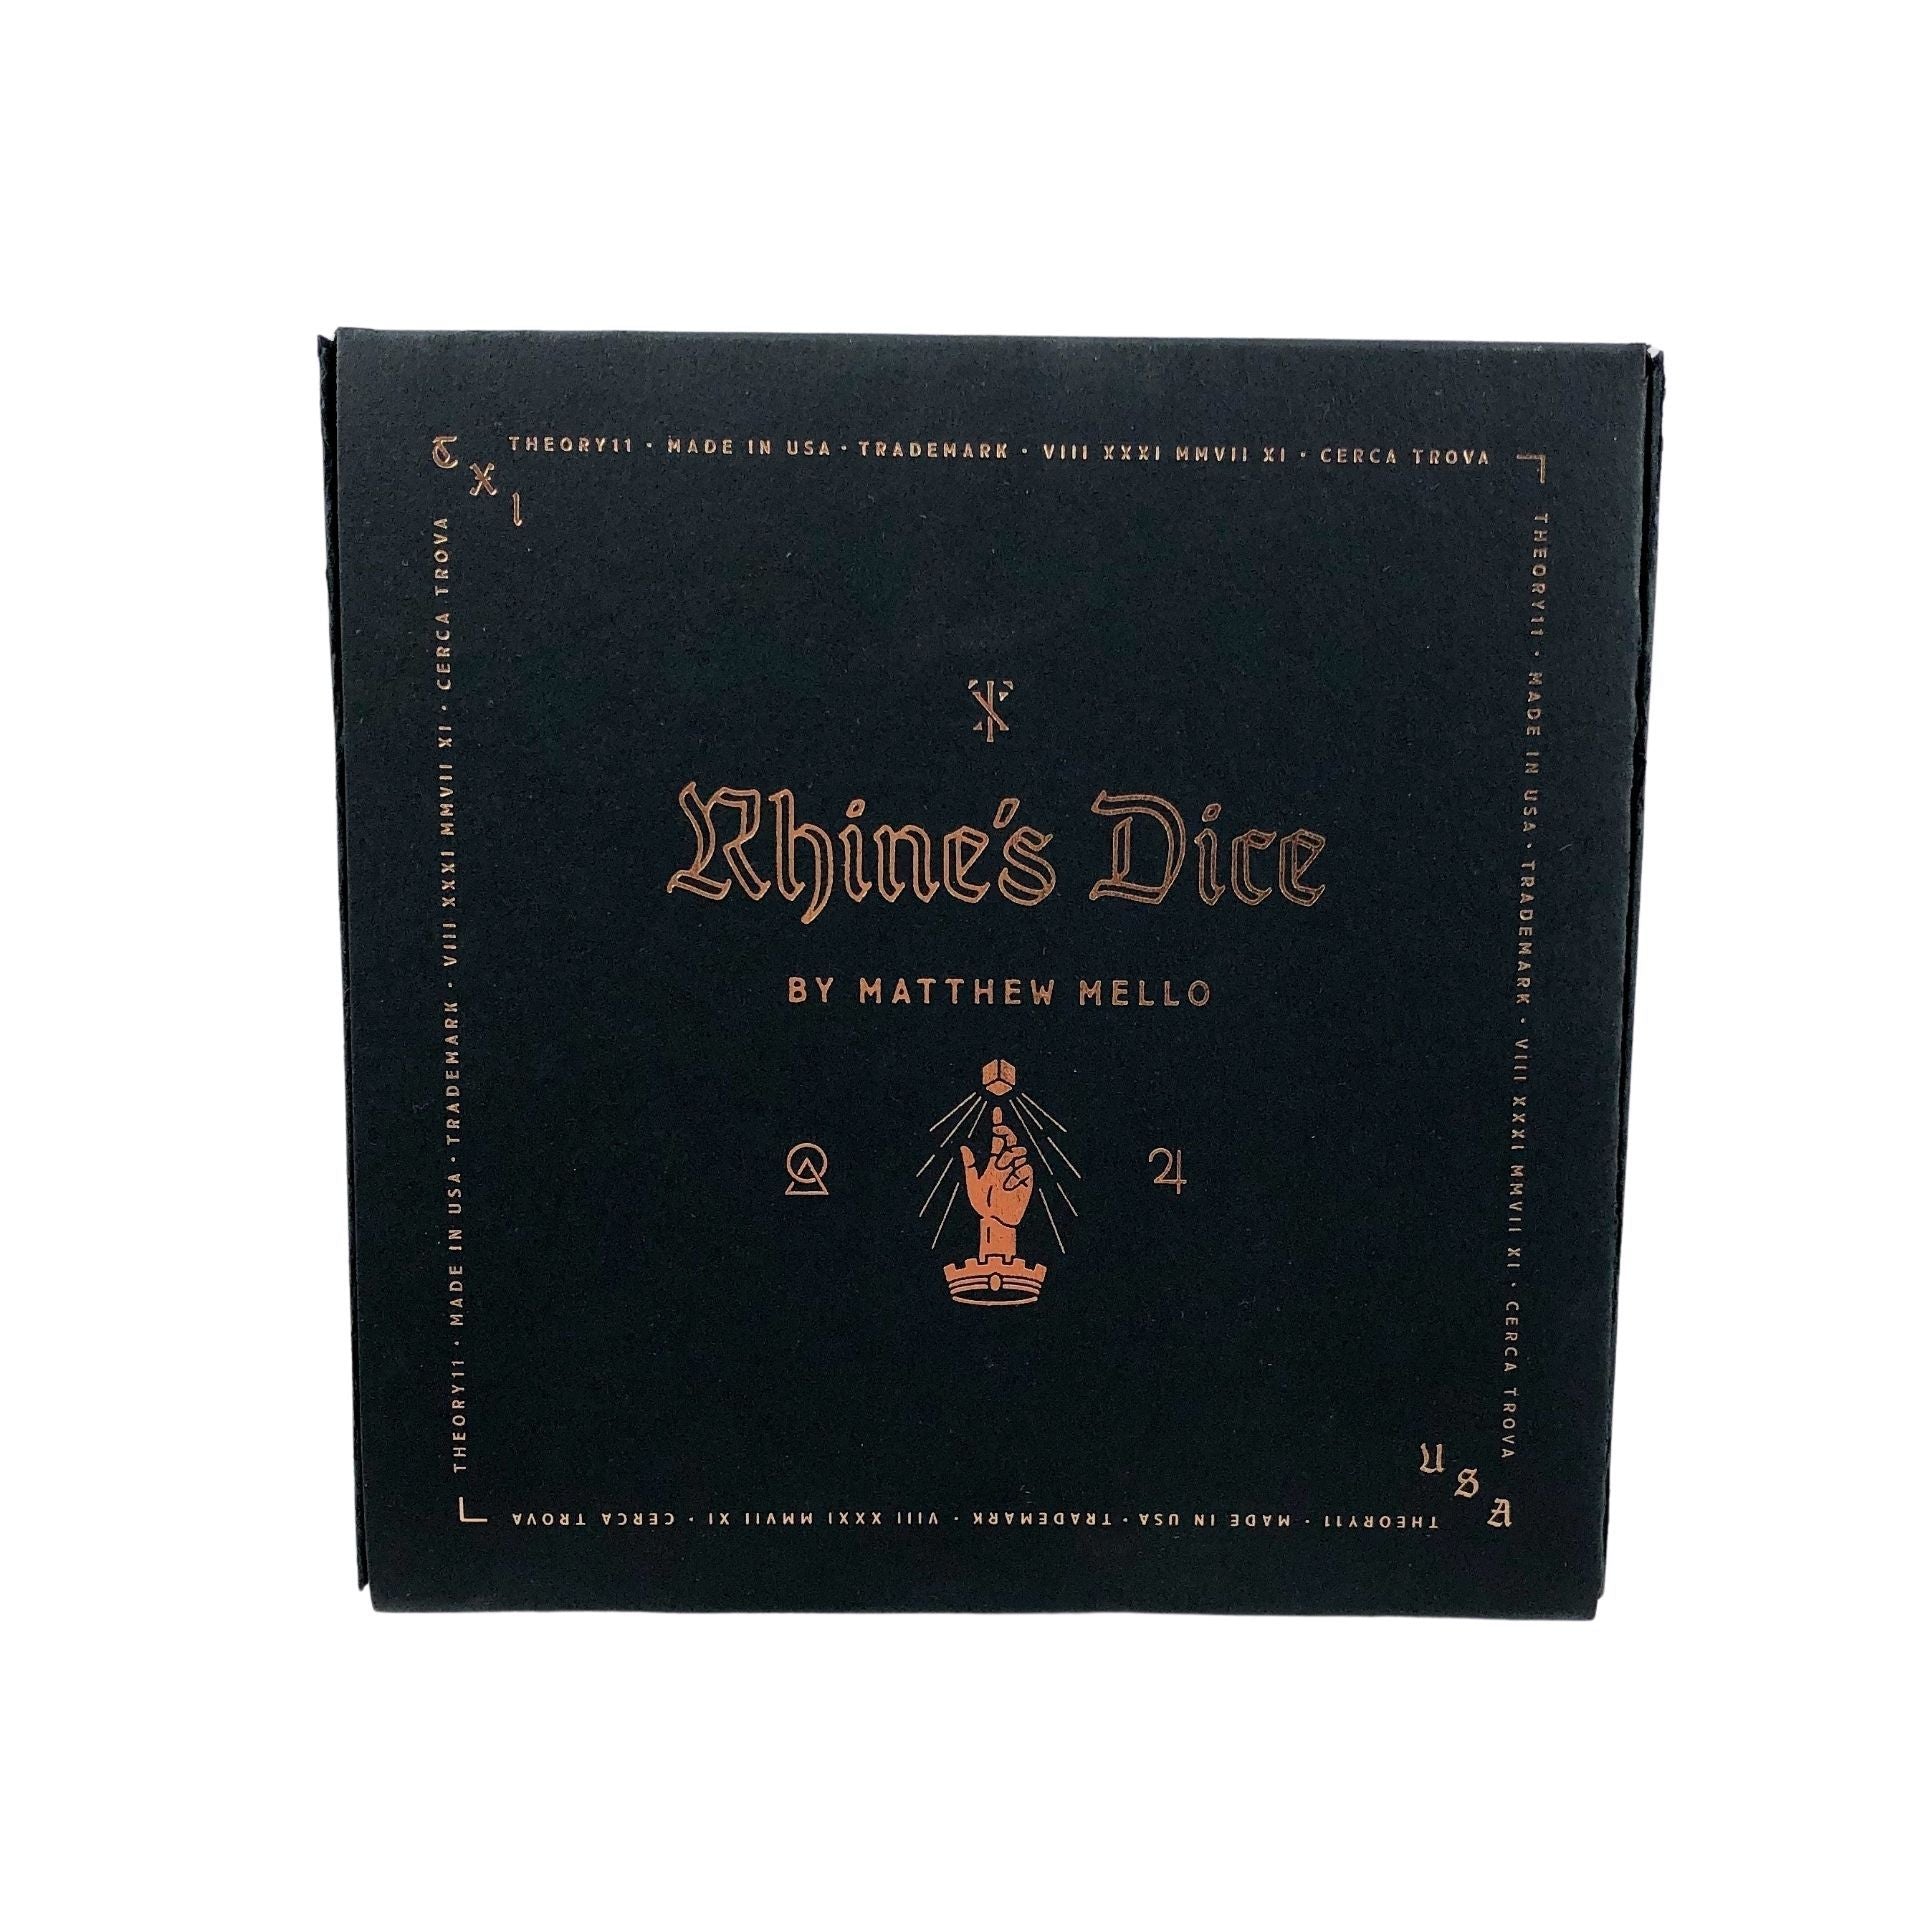 theory11: Rhine's Dice Box Set